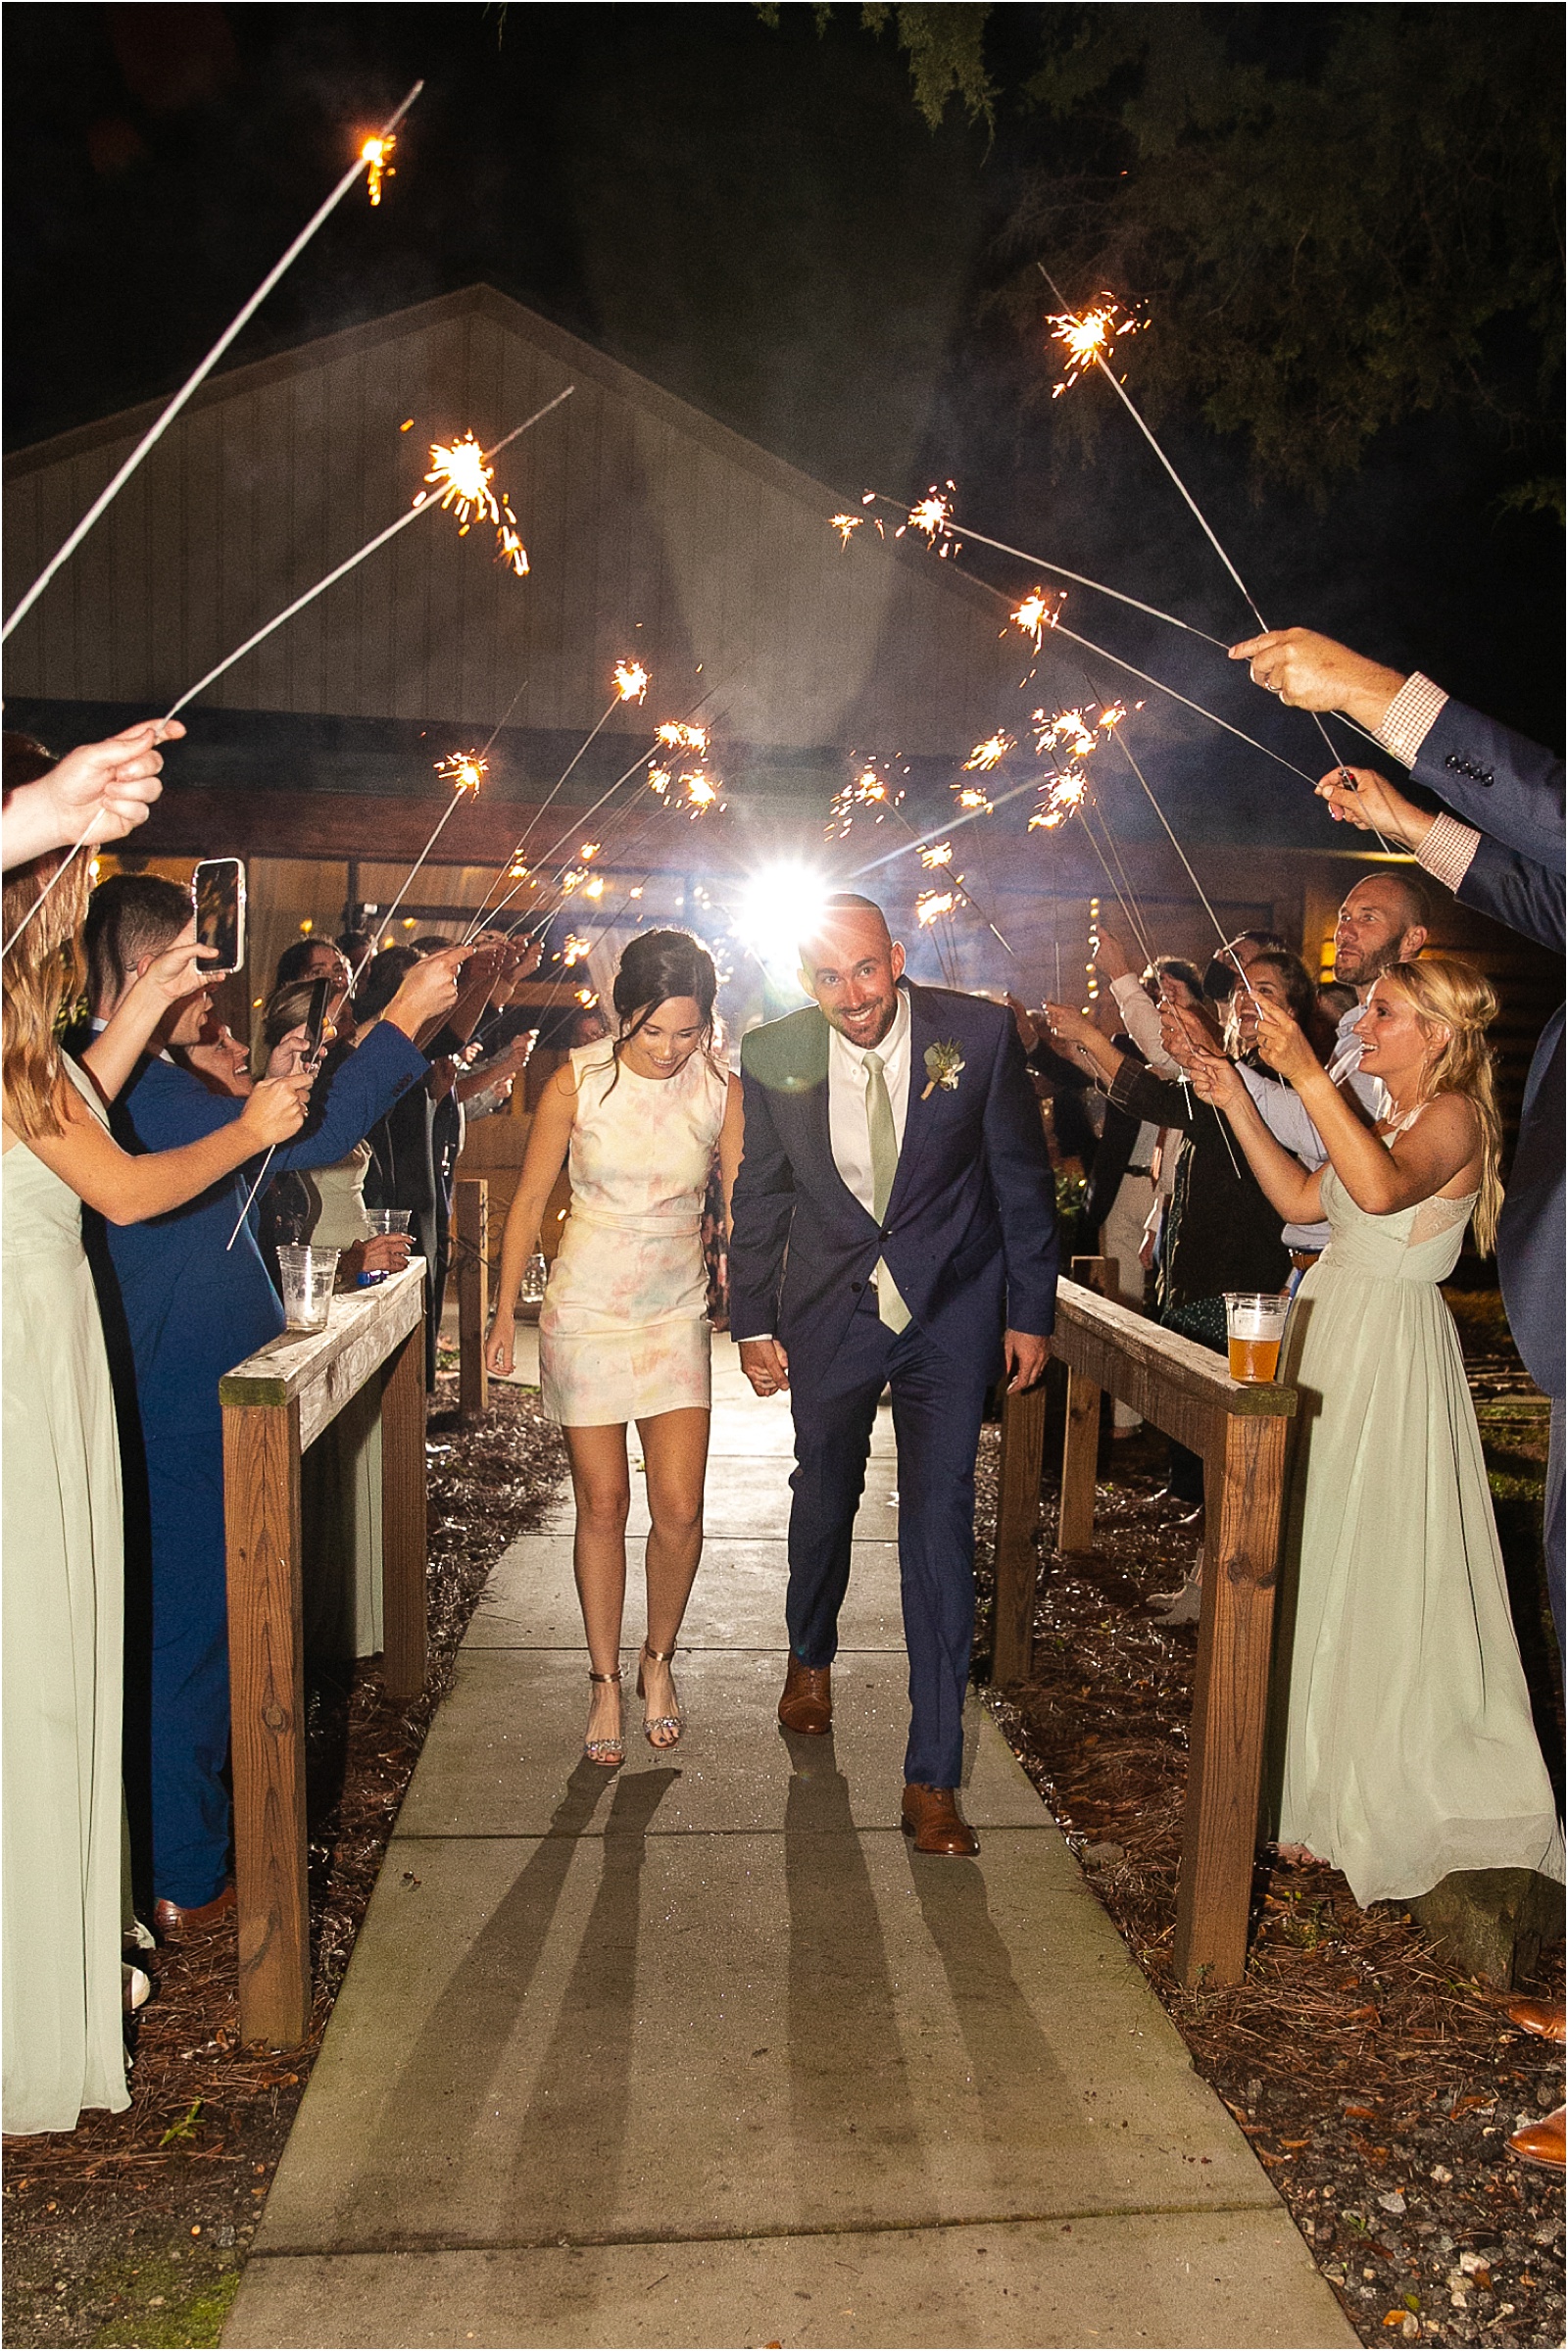 Bride and groom leaving barn wedding venue through sparklers